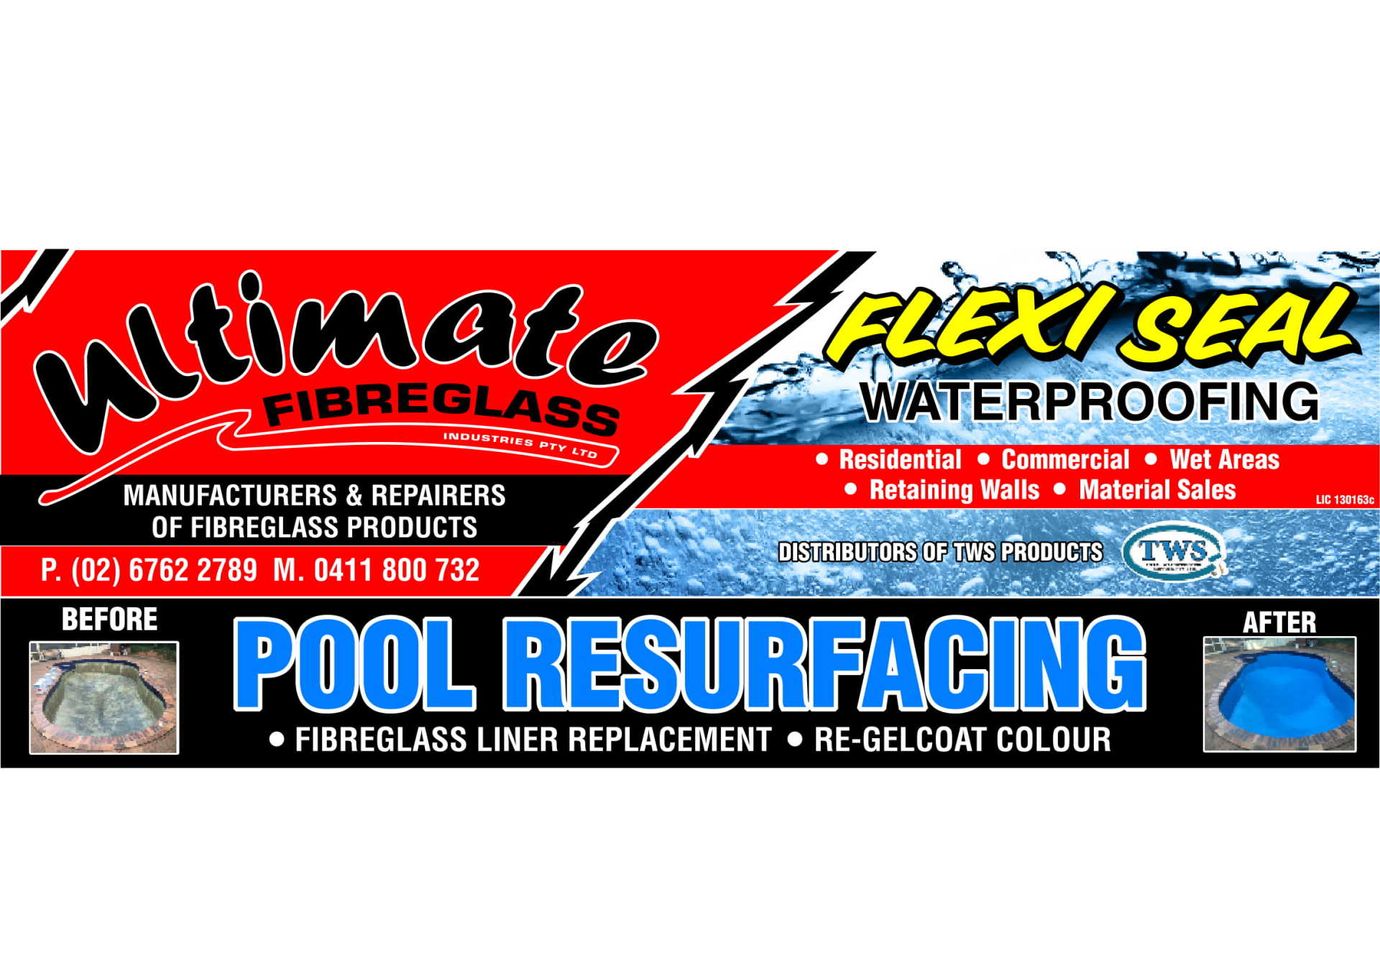 A poster for ultimate fibreglass flexi seal waterproofing pool resurfacing